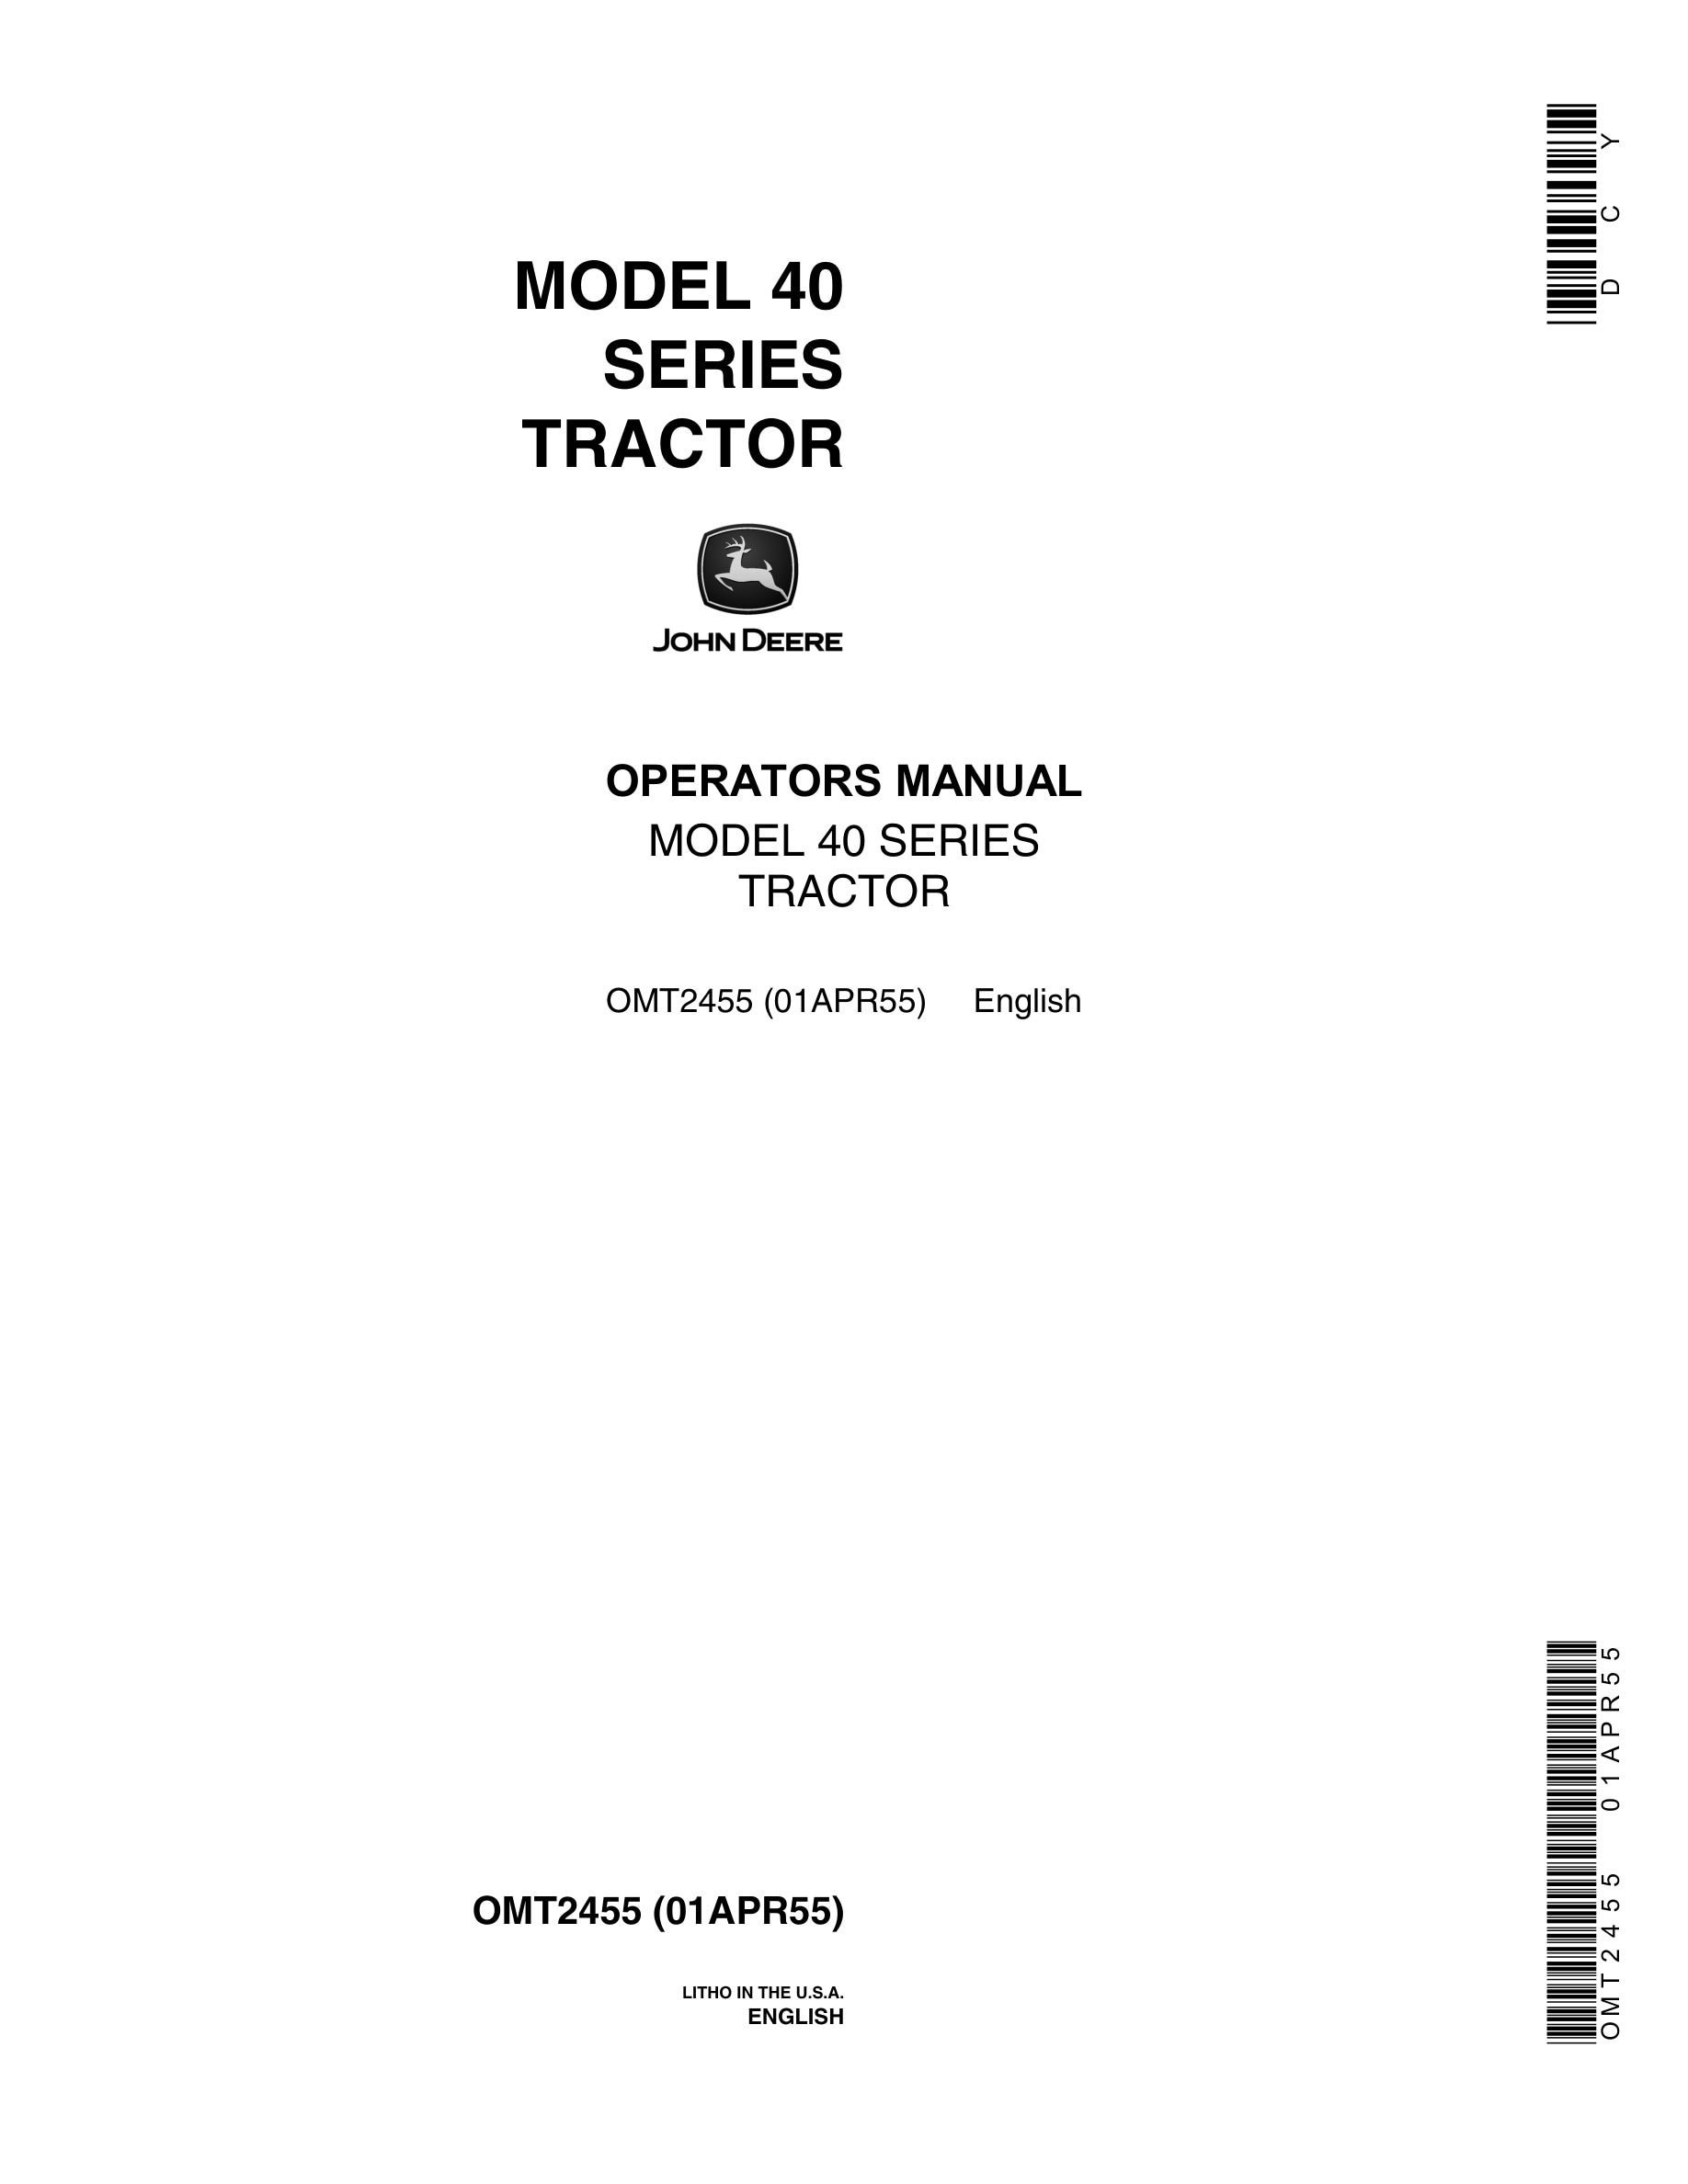 John Deere Model 40 Tractor Operator Manual OMT2455-1